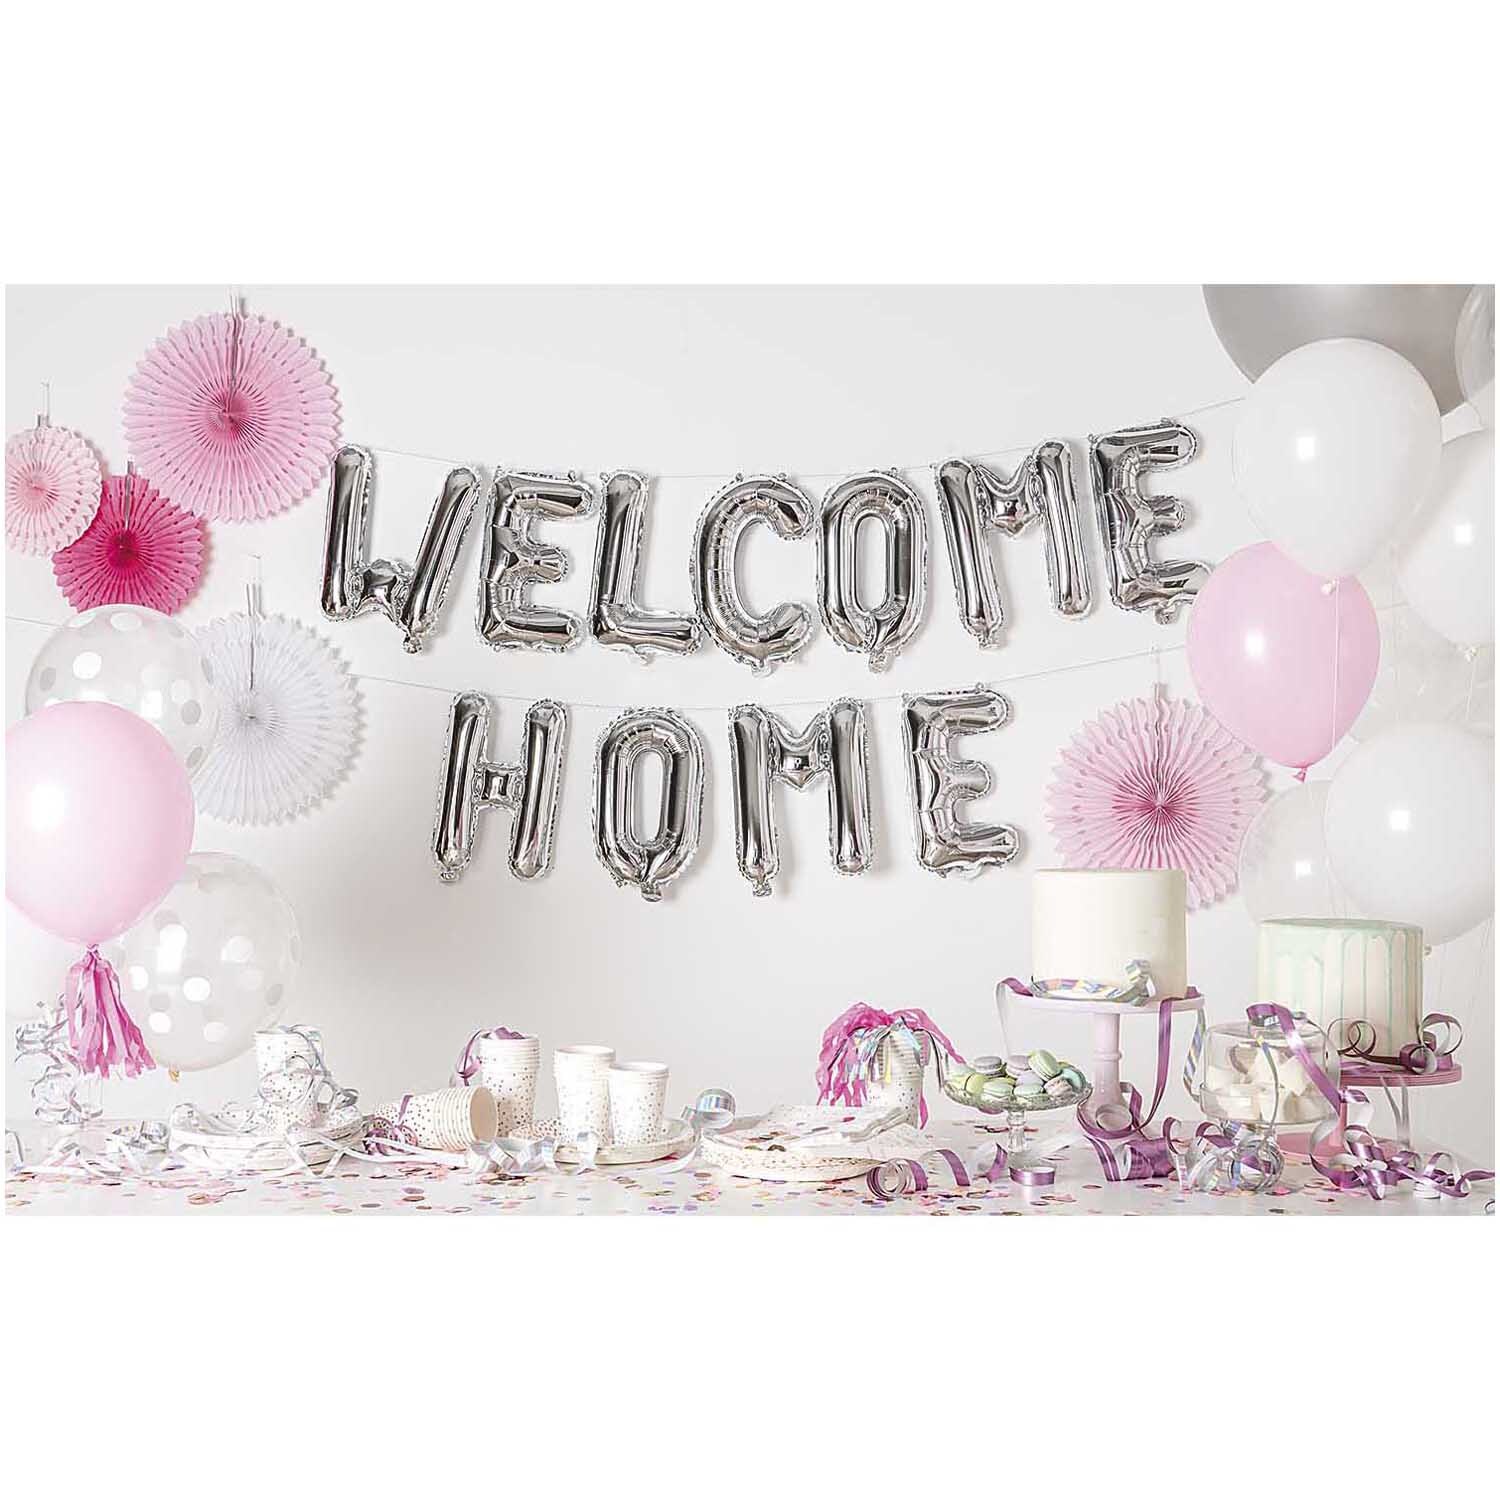 Folienballon-Set Welcome Home silber 11teilig